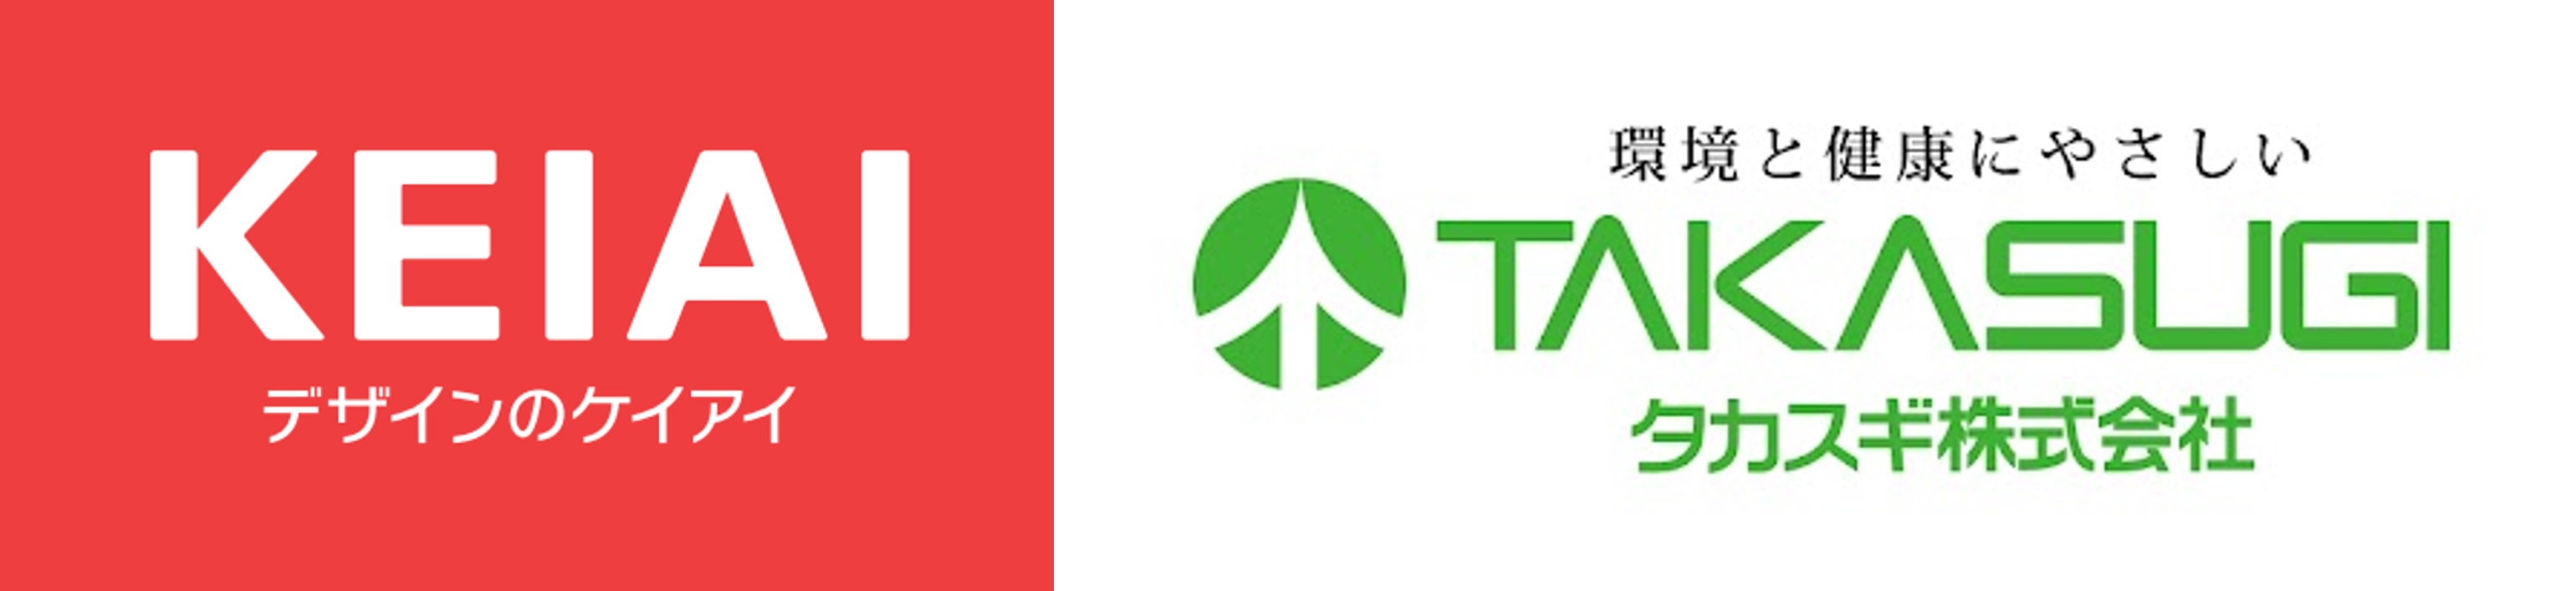 TAKASUGIと資本提携、シナジーを活かし双方の成長戦略強化のサブ画像1